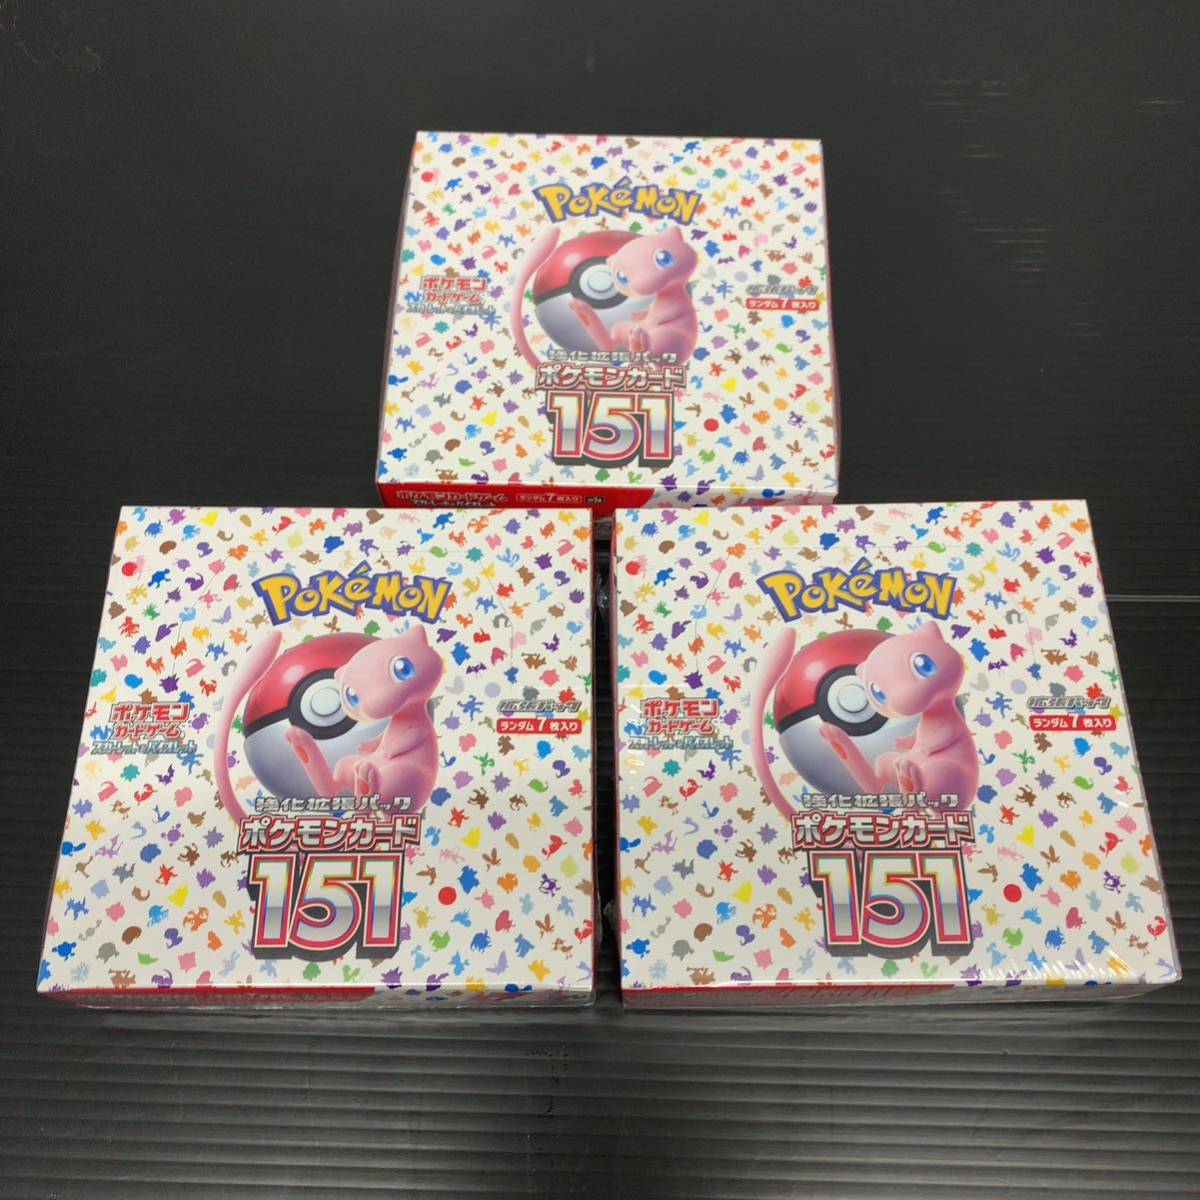 Pokemon ポケモンカード151 3BOX シュリンク付き 新品未使用 未開封品 